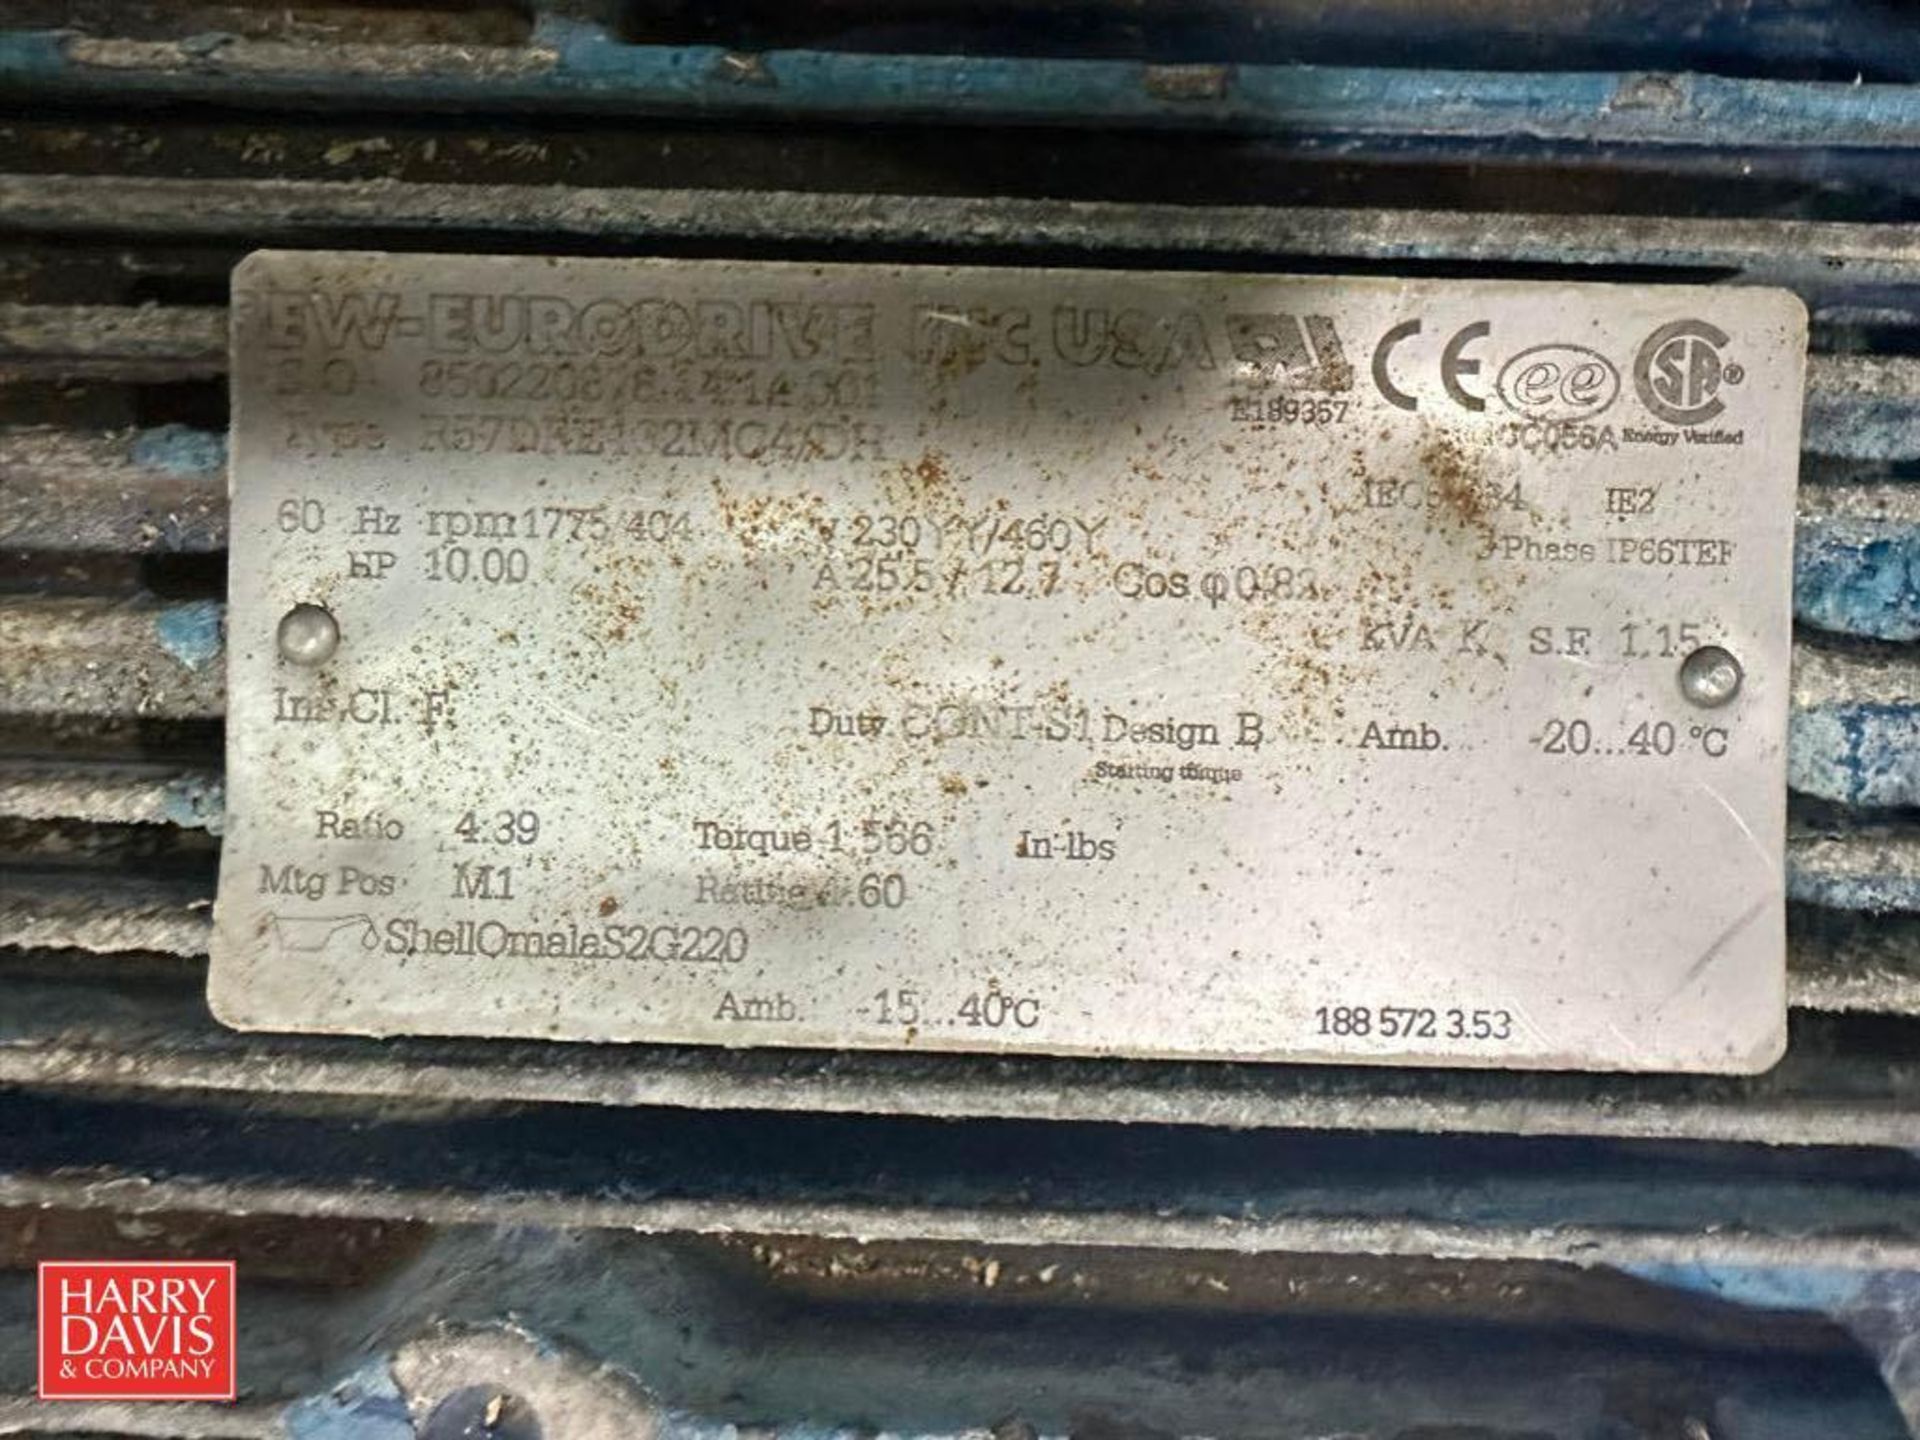 Waukesha-Cherry Burrell Positive Displacement Pump, Model: 060U2C, S/N: 26562200 with Sew-Eurodrive - Image 3 of 3